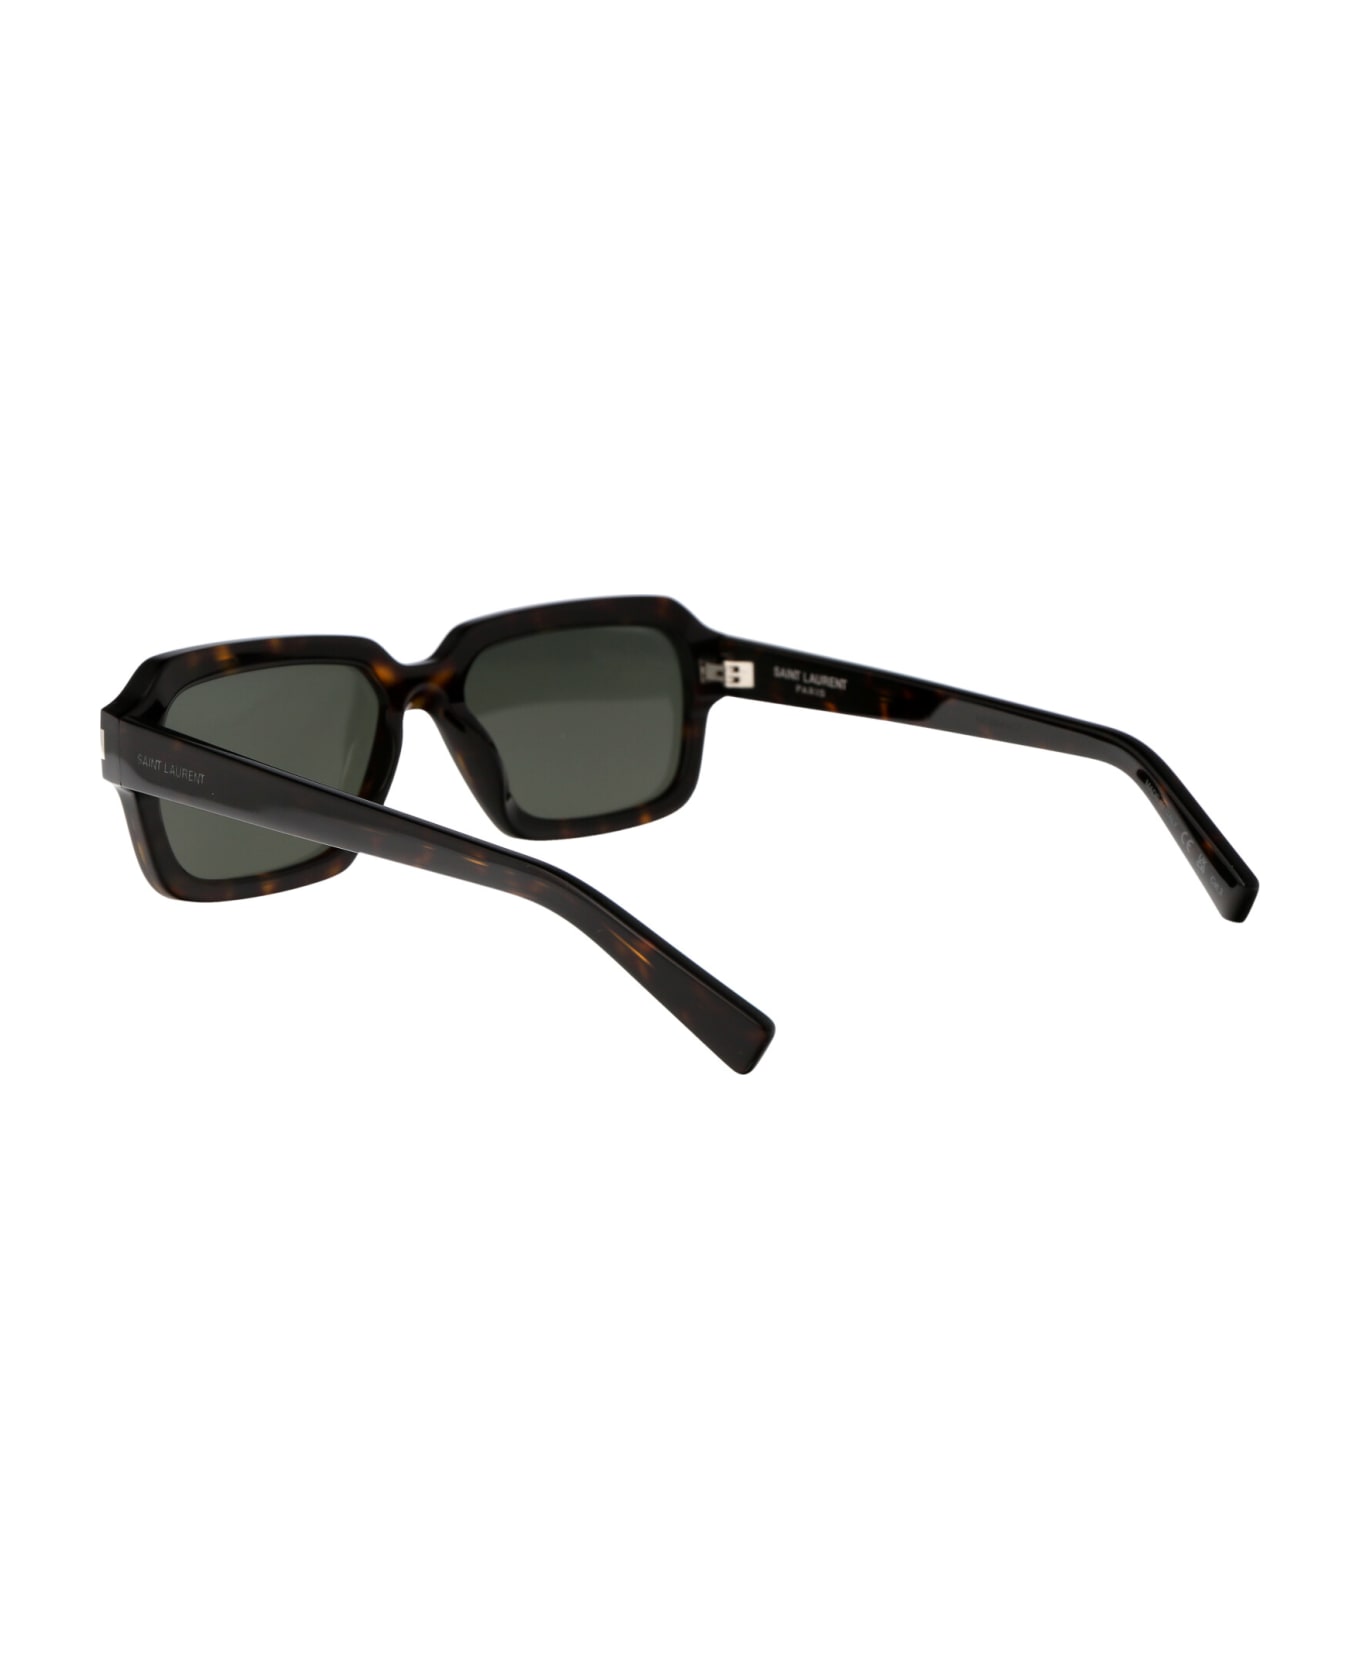 Saint Laurent Eyewear Sl 611 Sunglasses - 002 HAVANA HAVANA GREY